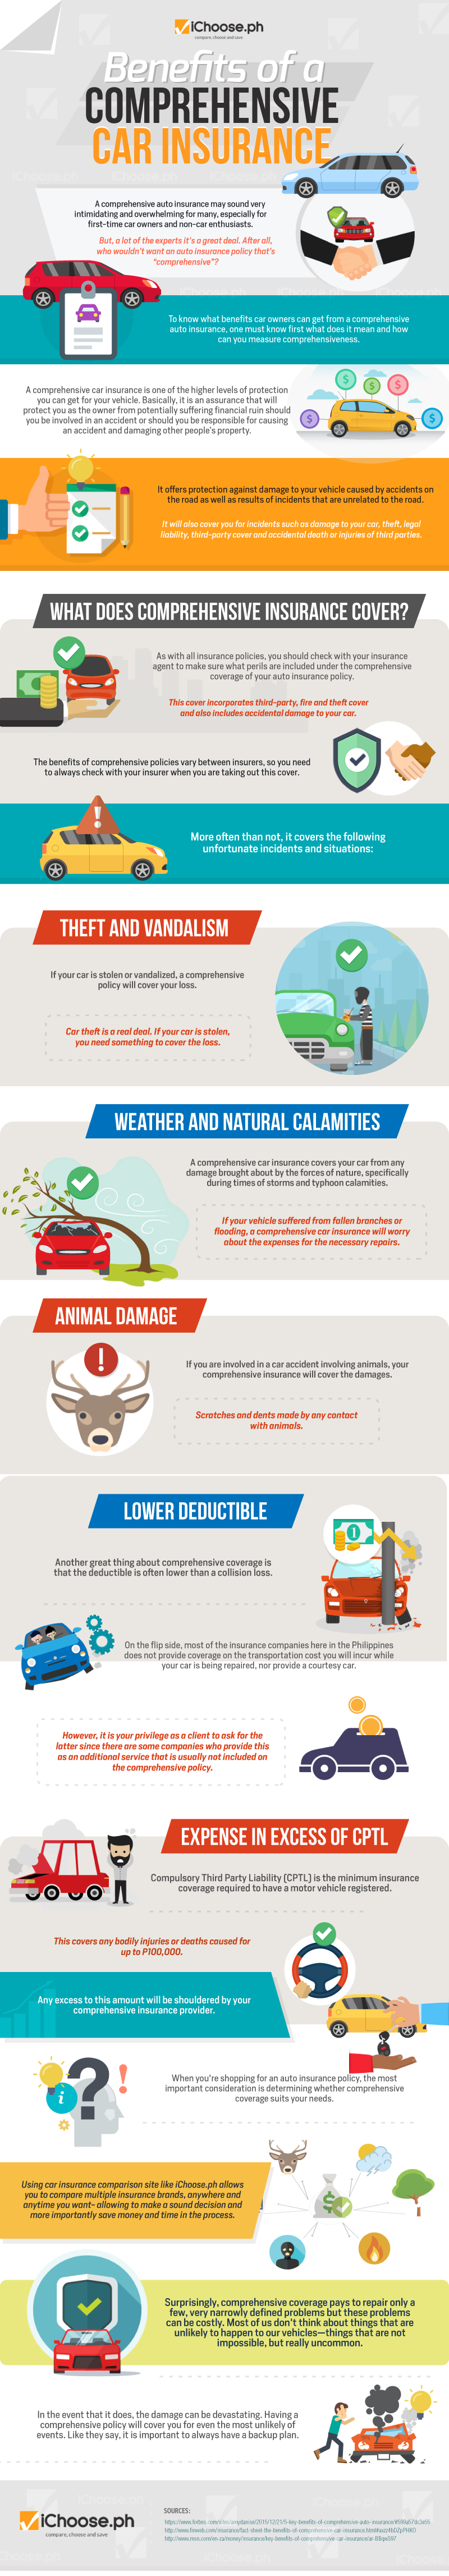 Benefits of a Comprehensive Car Insurance 